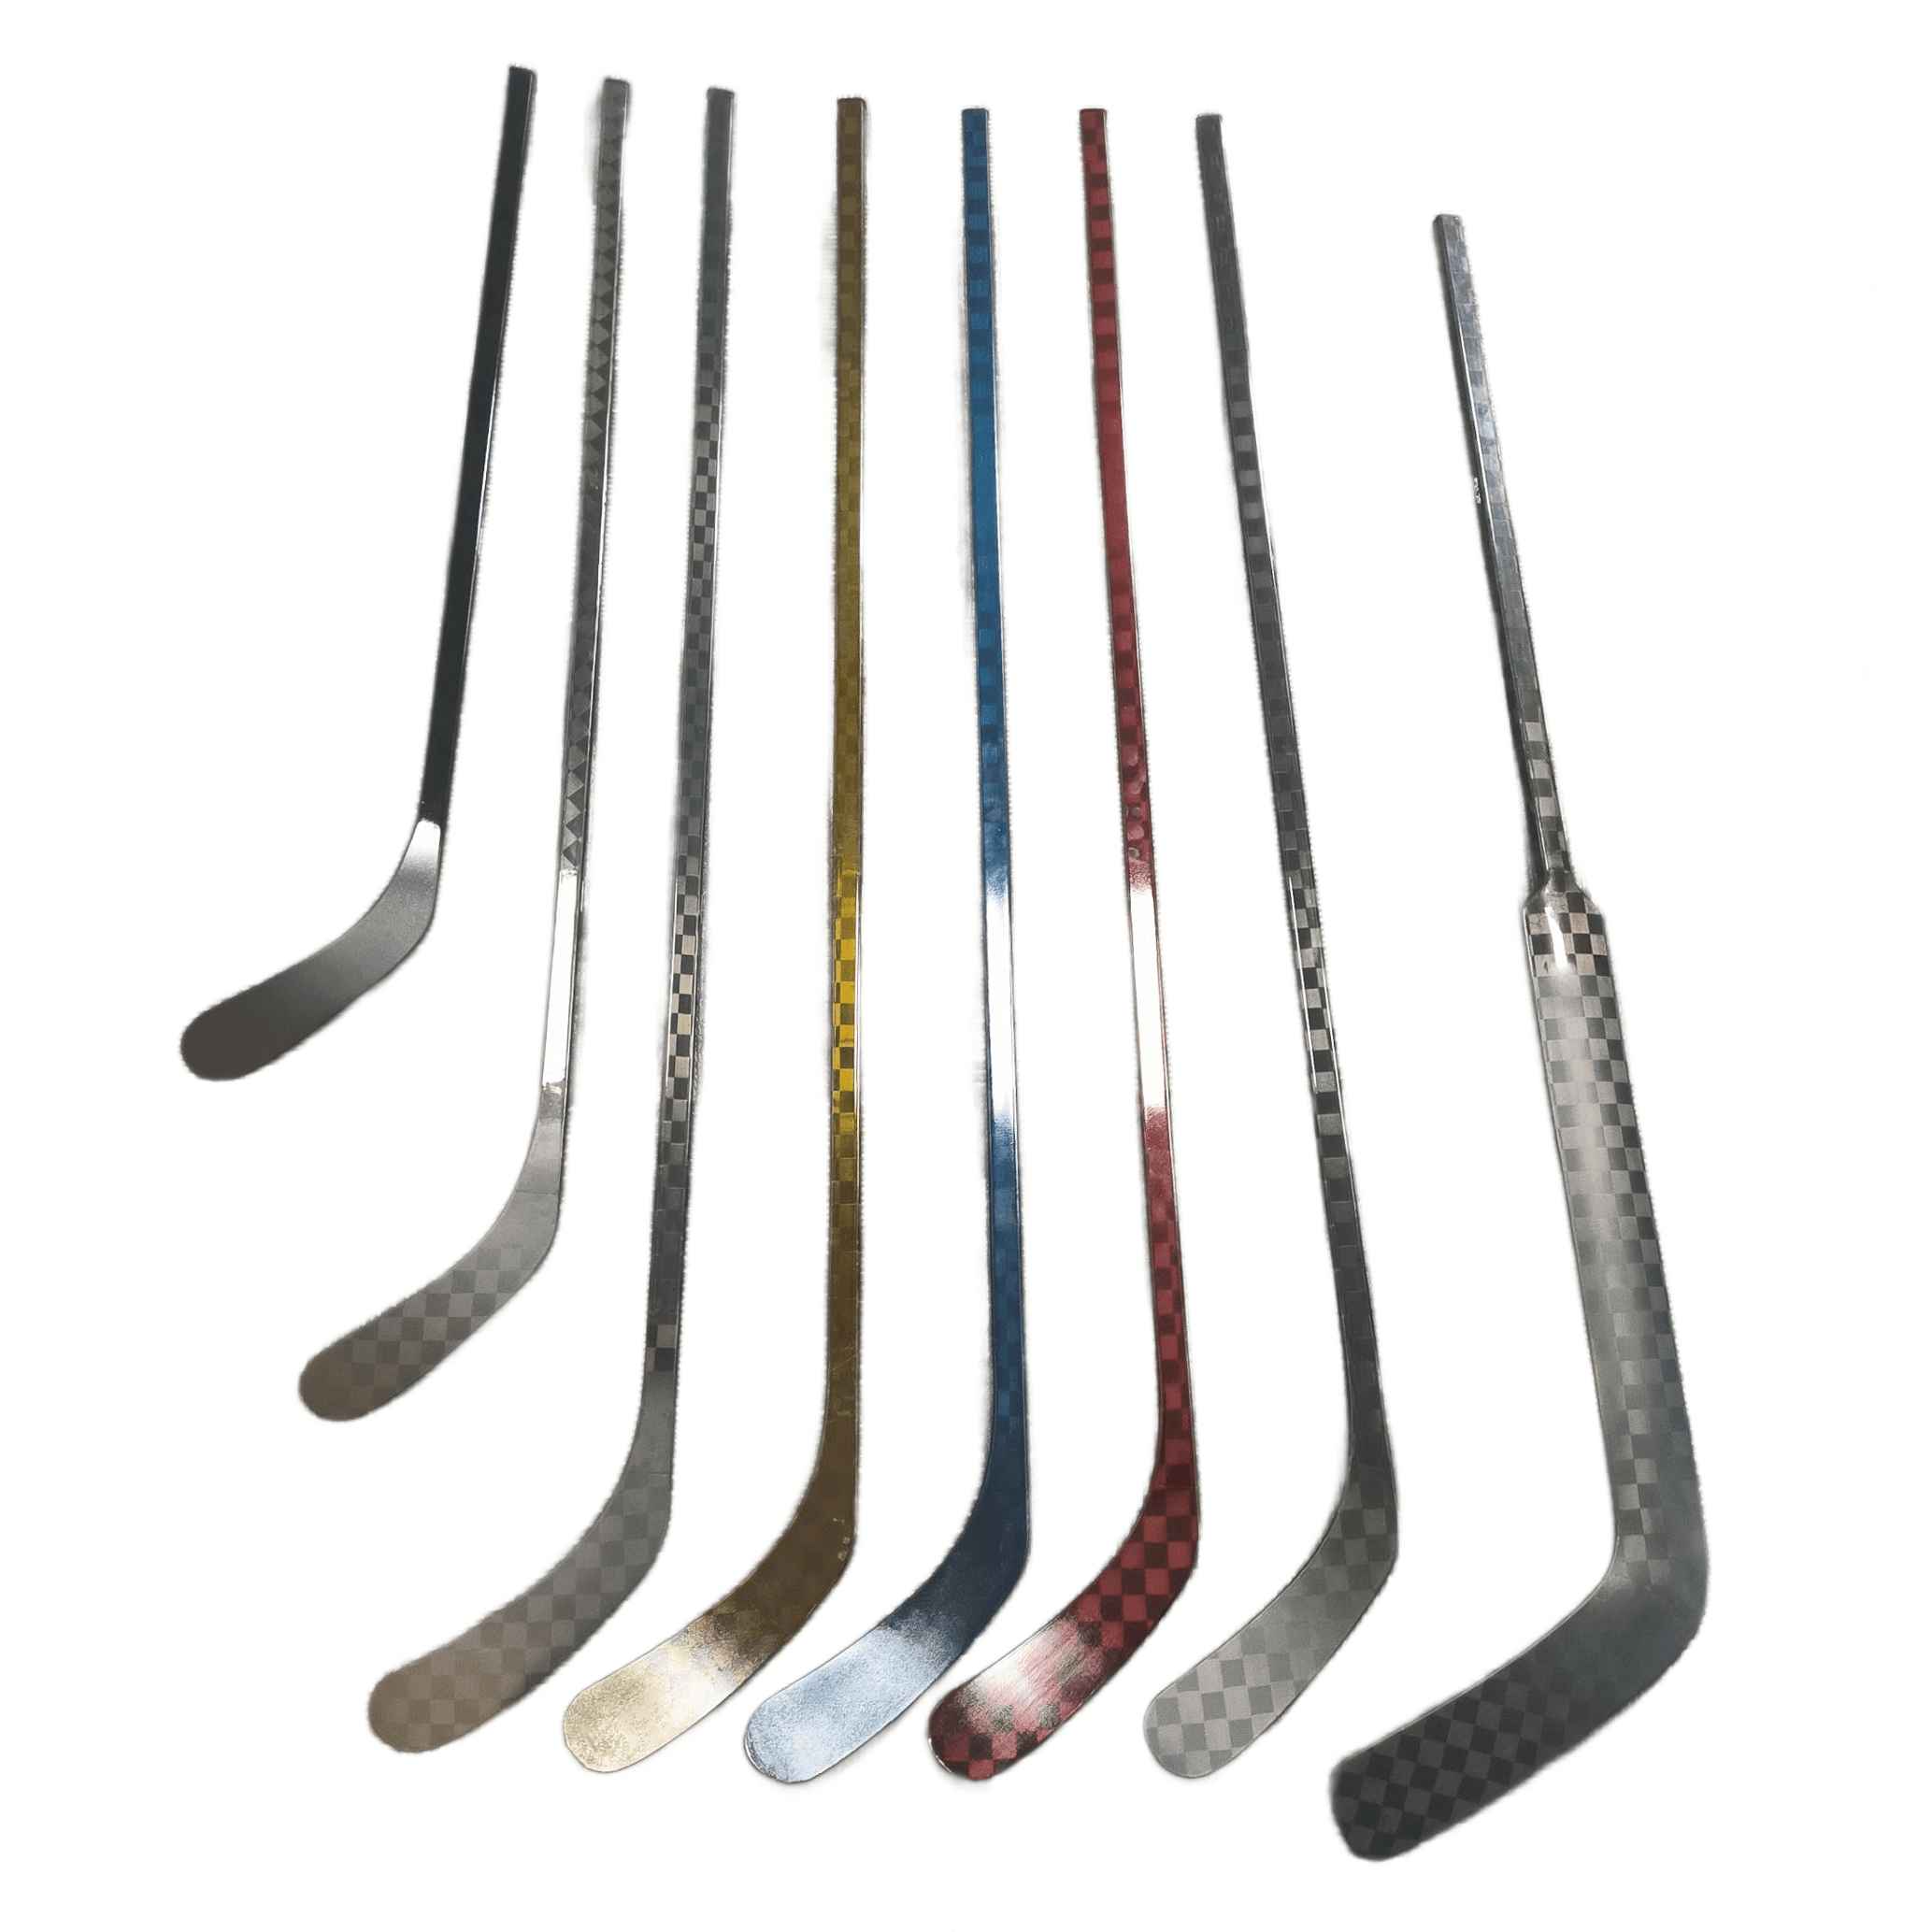 Composite ice hockey sticks